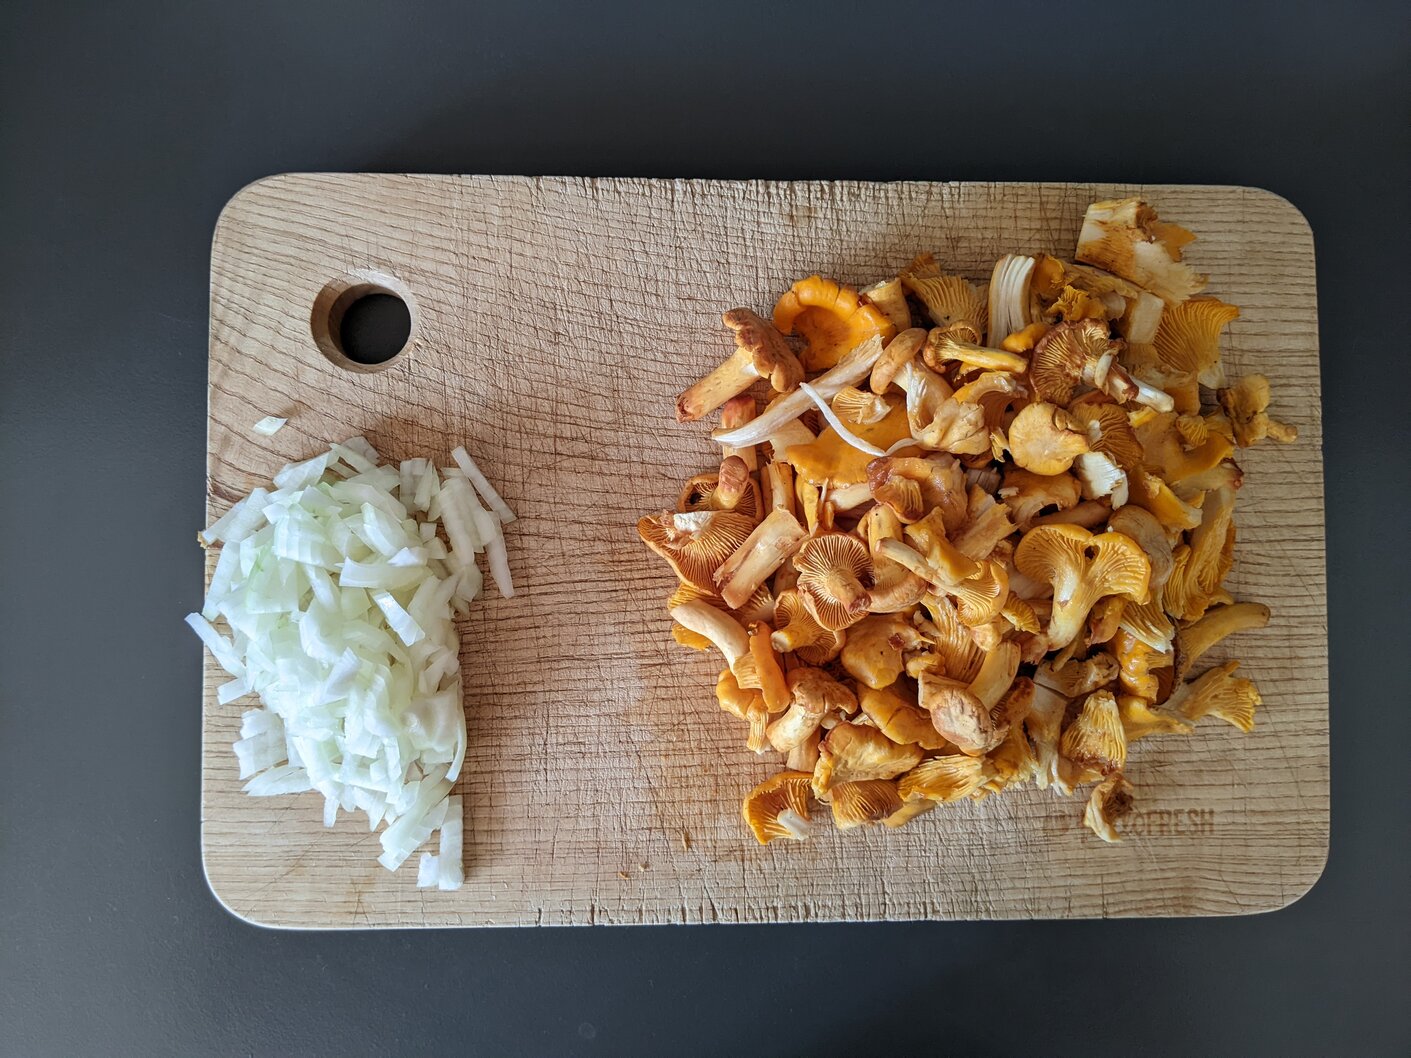 Chopped onion and mushrooms